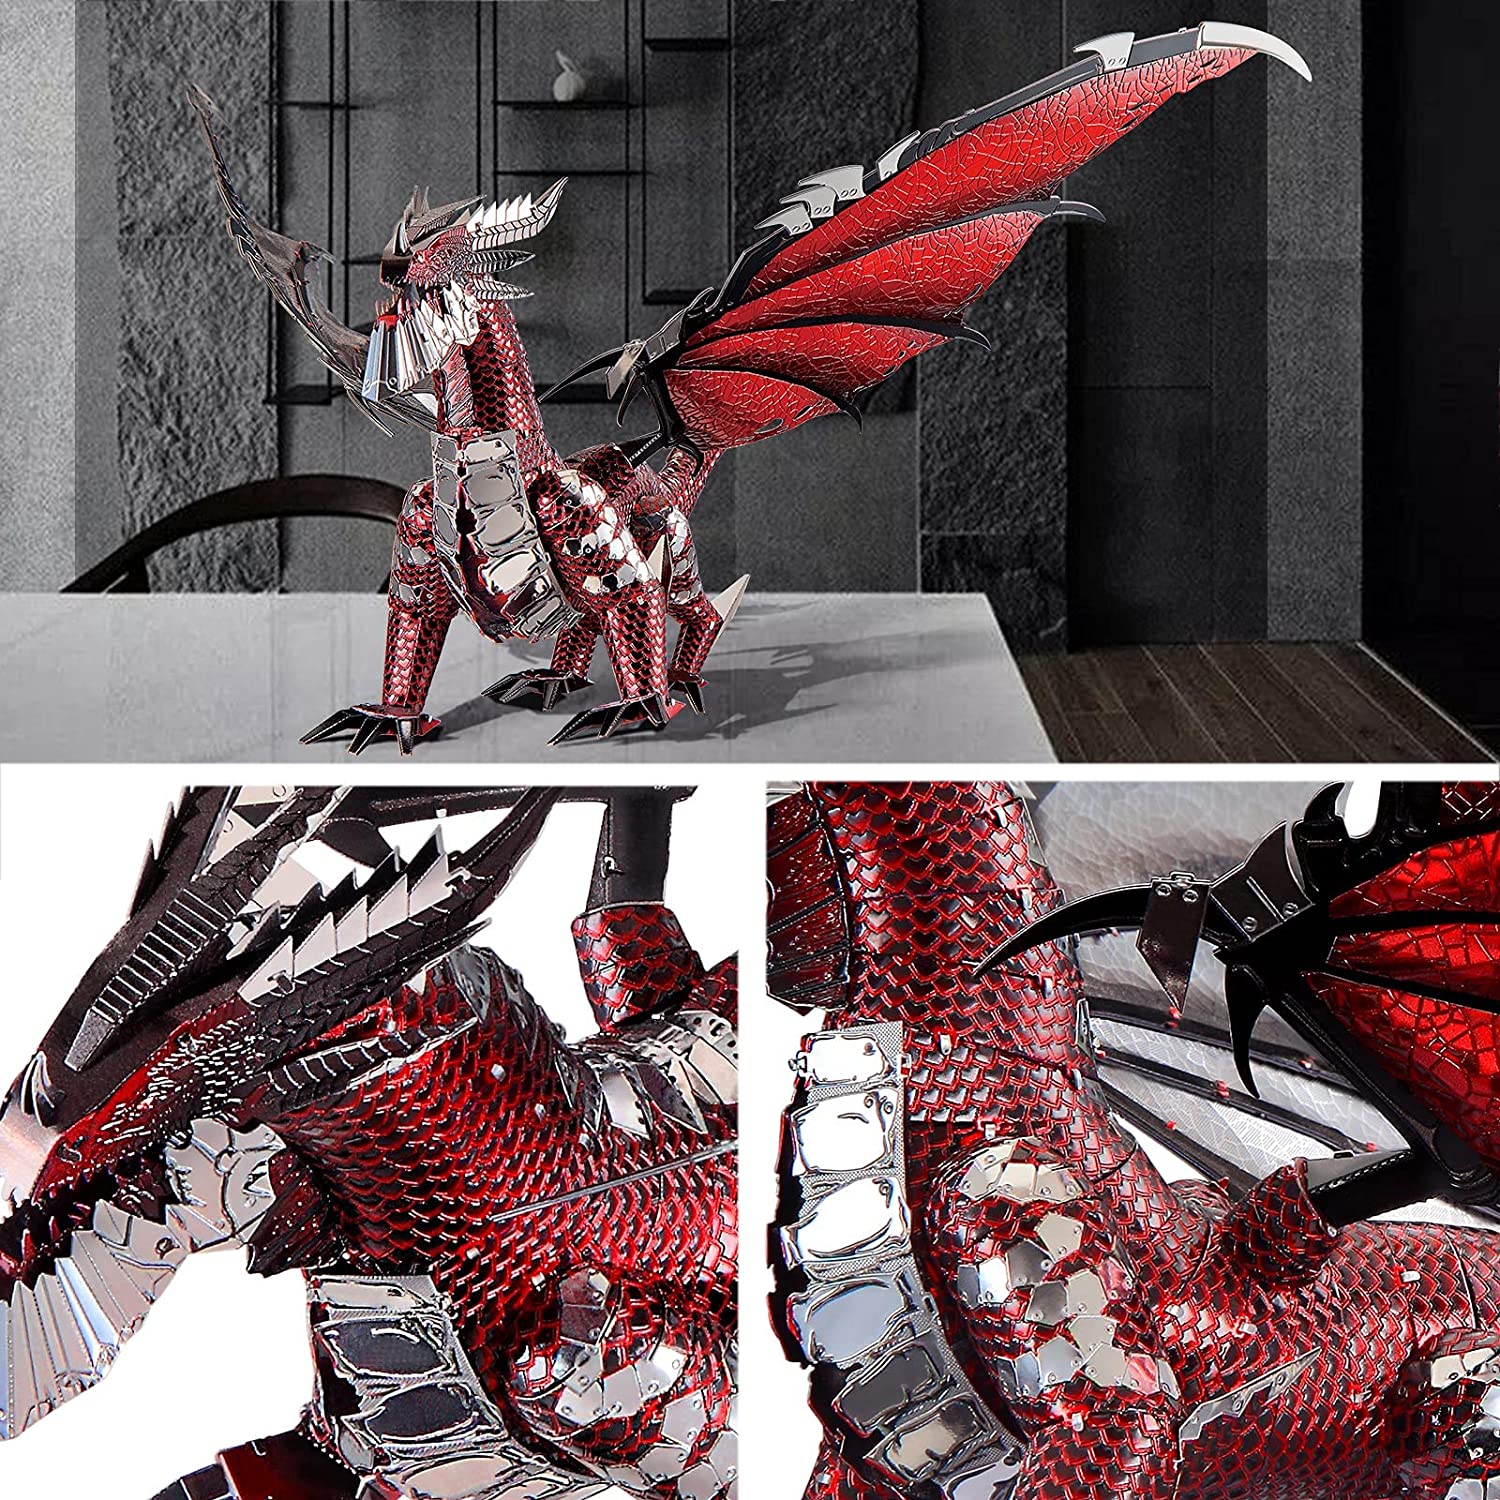 SmartBabyKid™ 3D Metal Model Kits for Teens-Black Dragon King